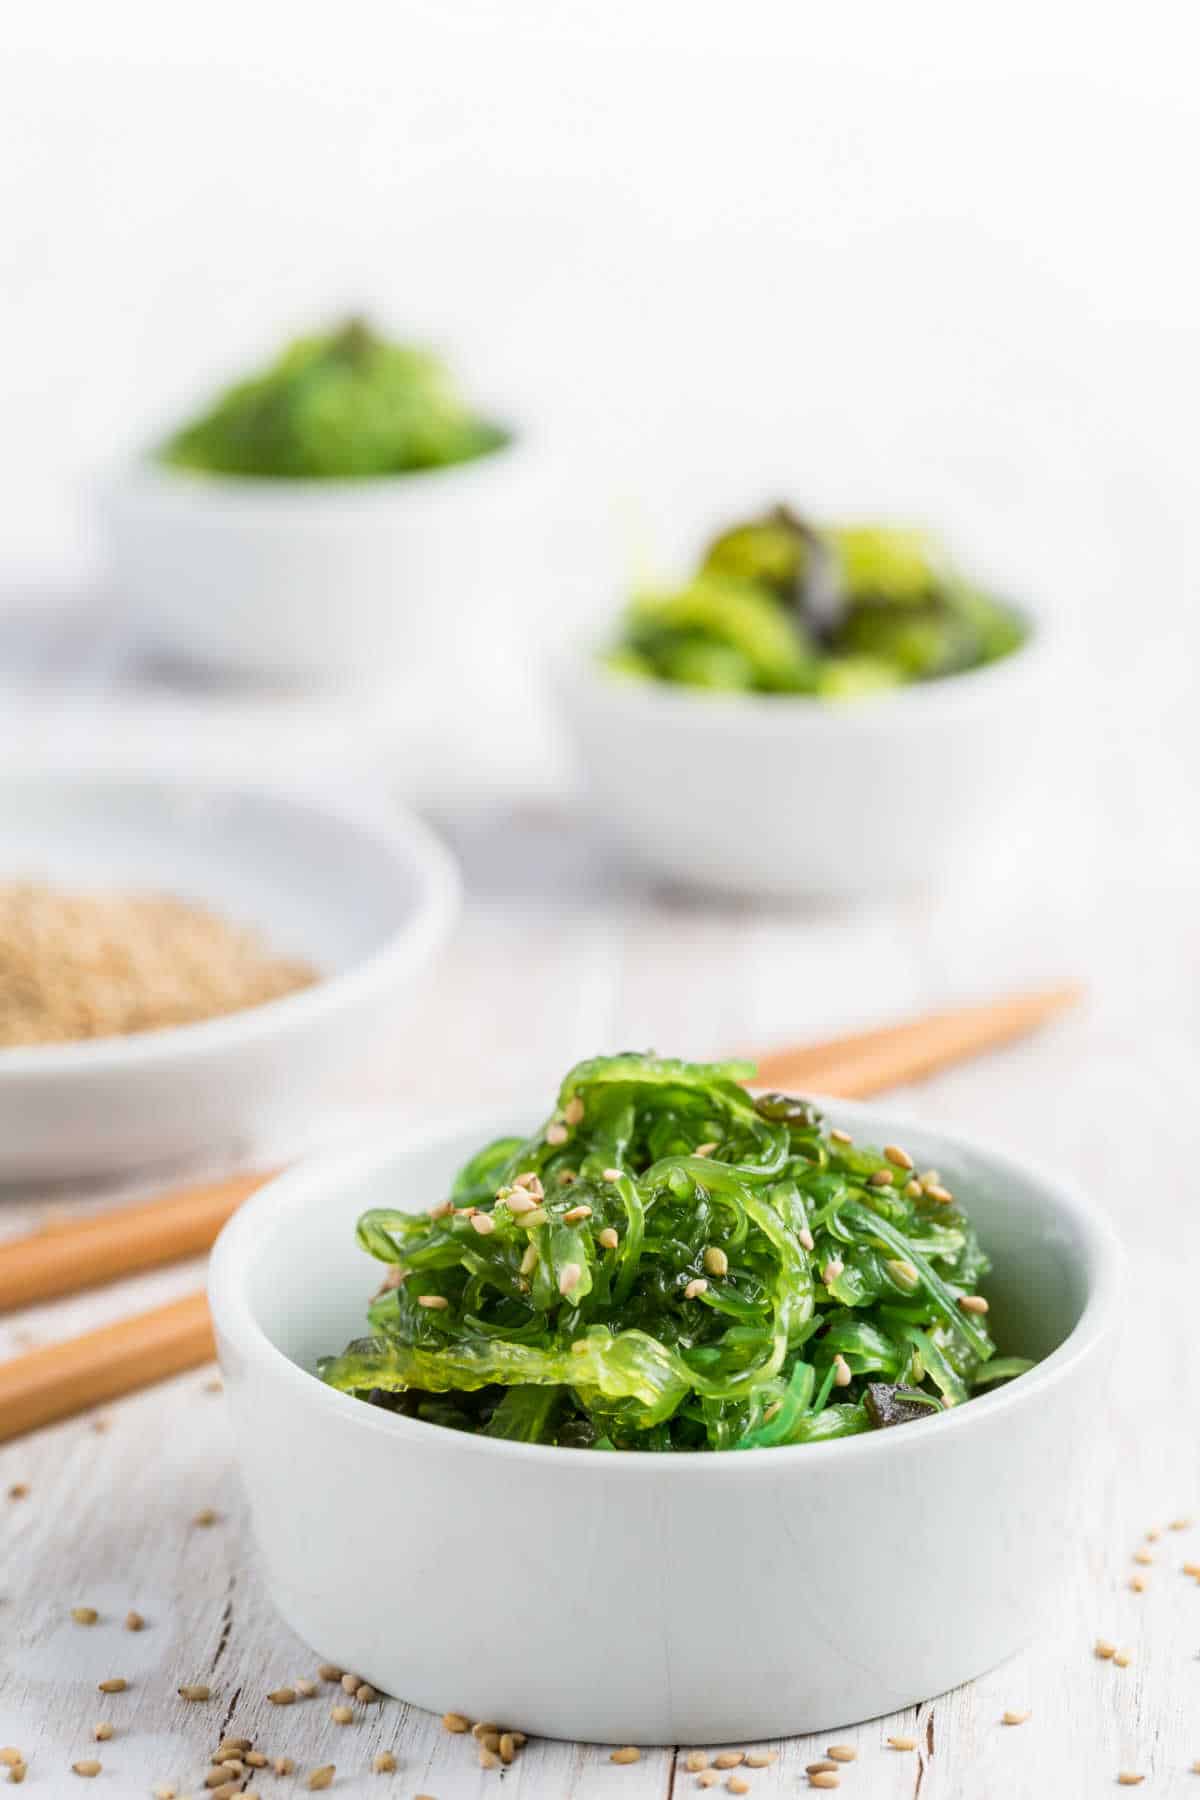 Nori seaweed vegetable in a bowl.